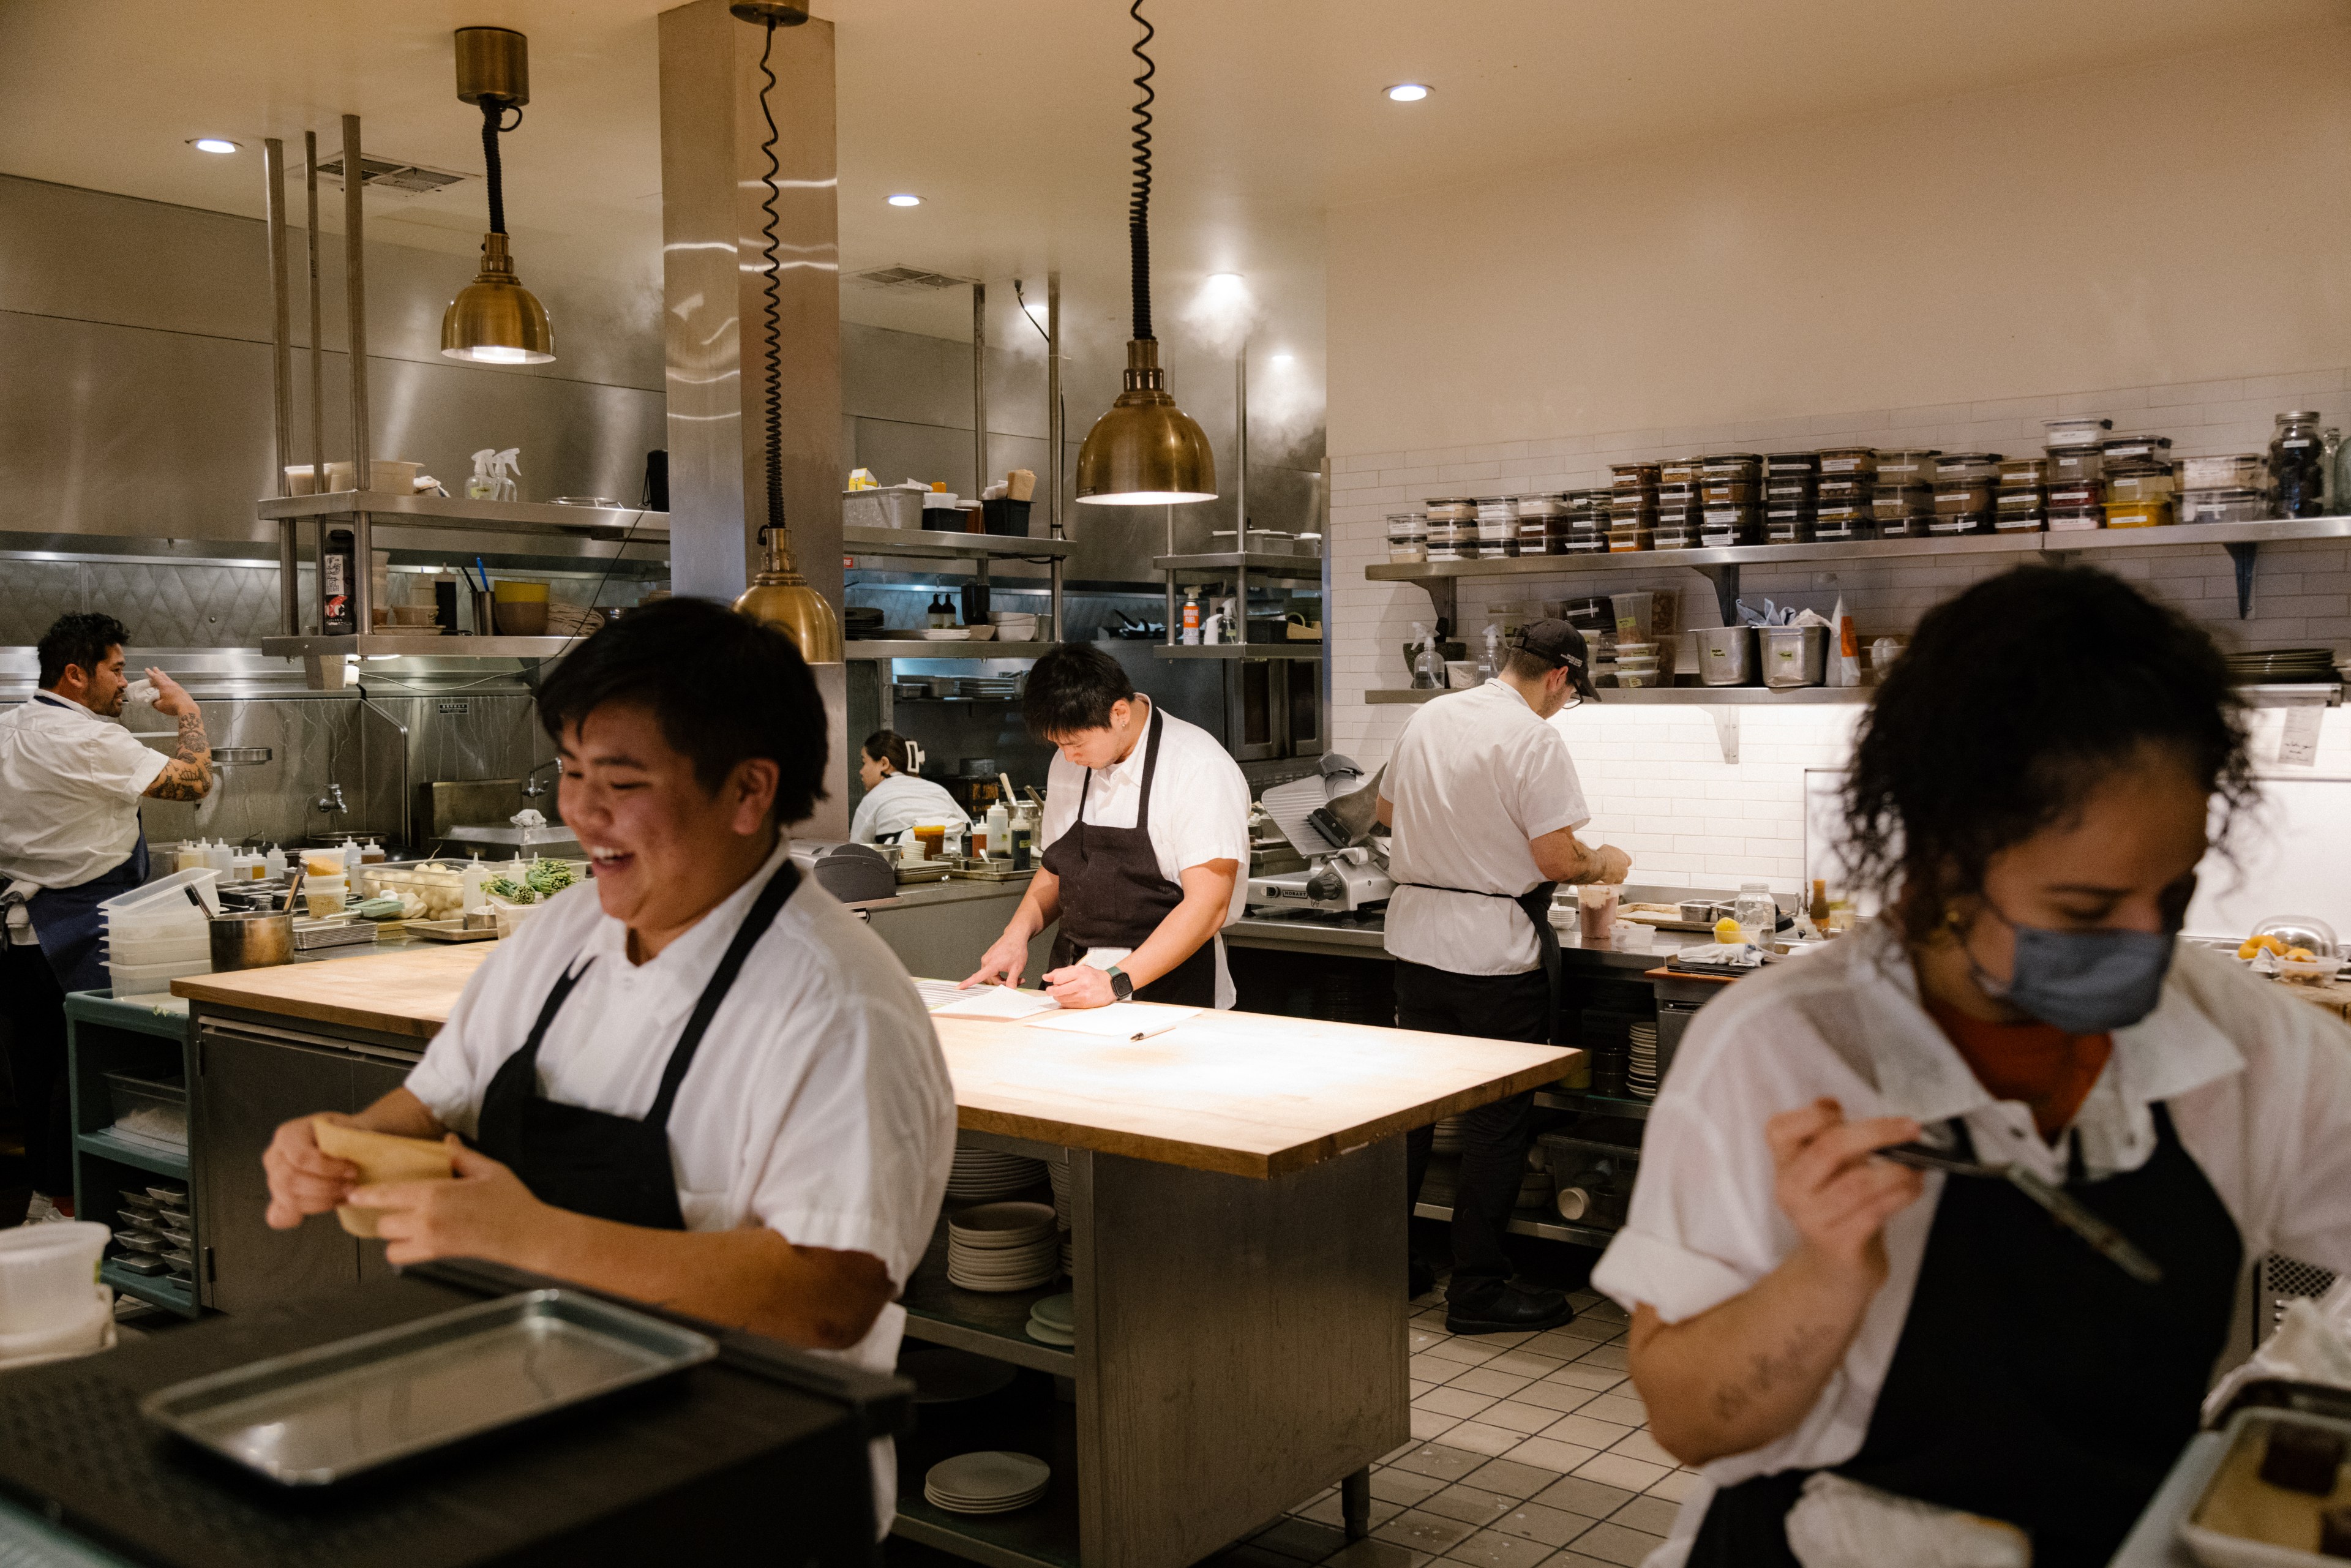 Kitchen staff preparing for service at Mister Jiu's restaurant in San Francisco